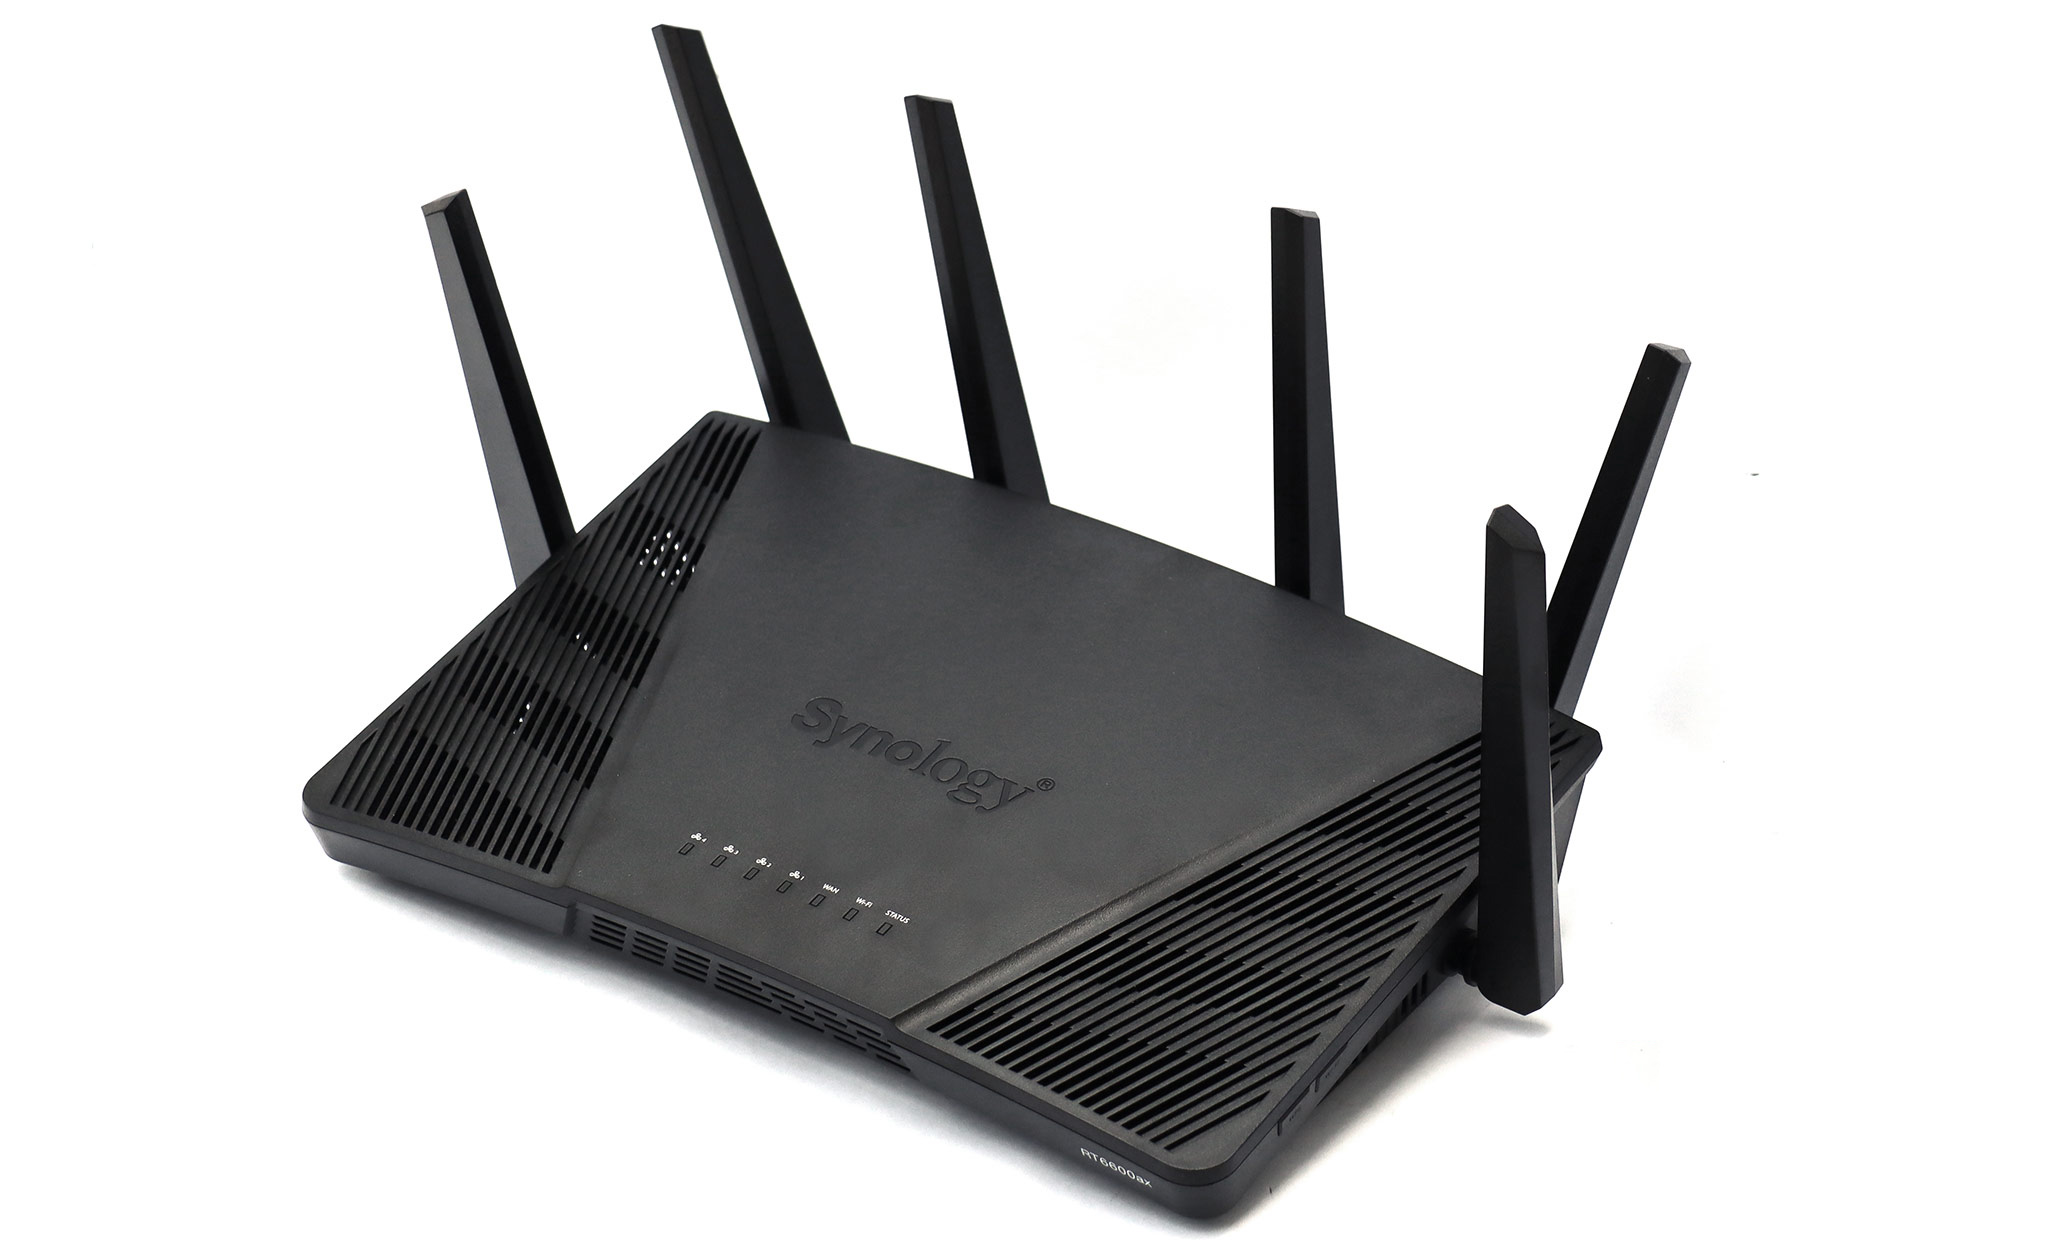 Synology RT6600ax AX6600 Wireless Router Review | KitGuru